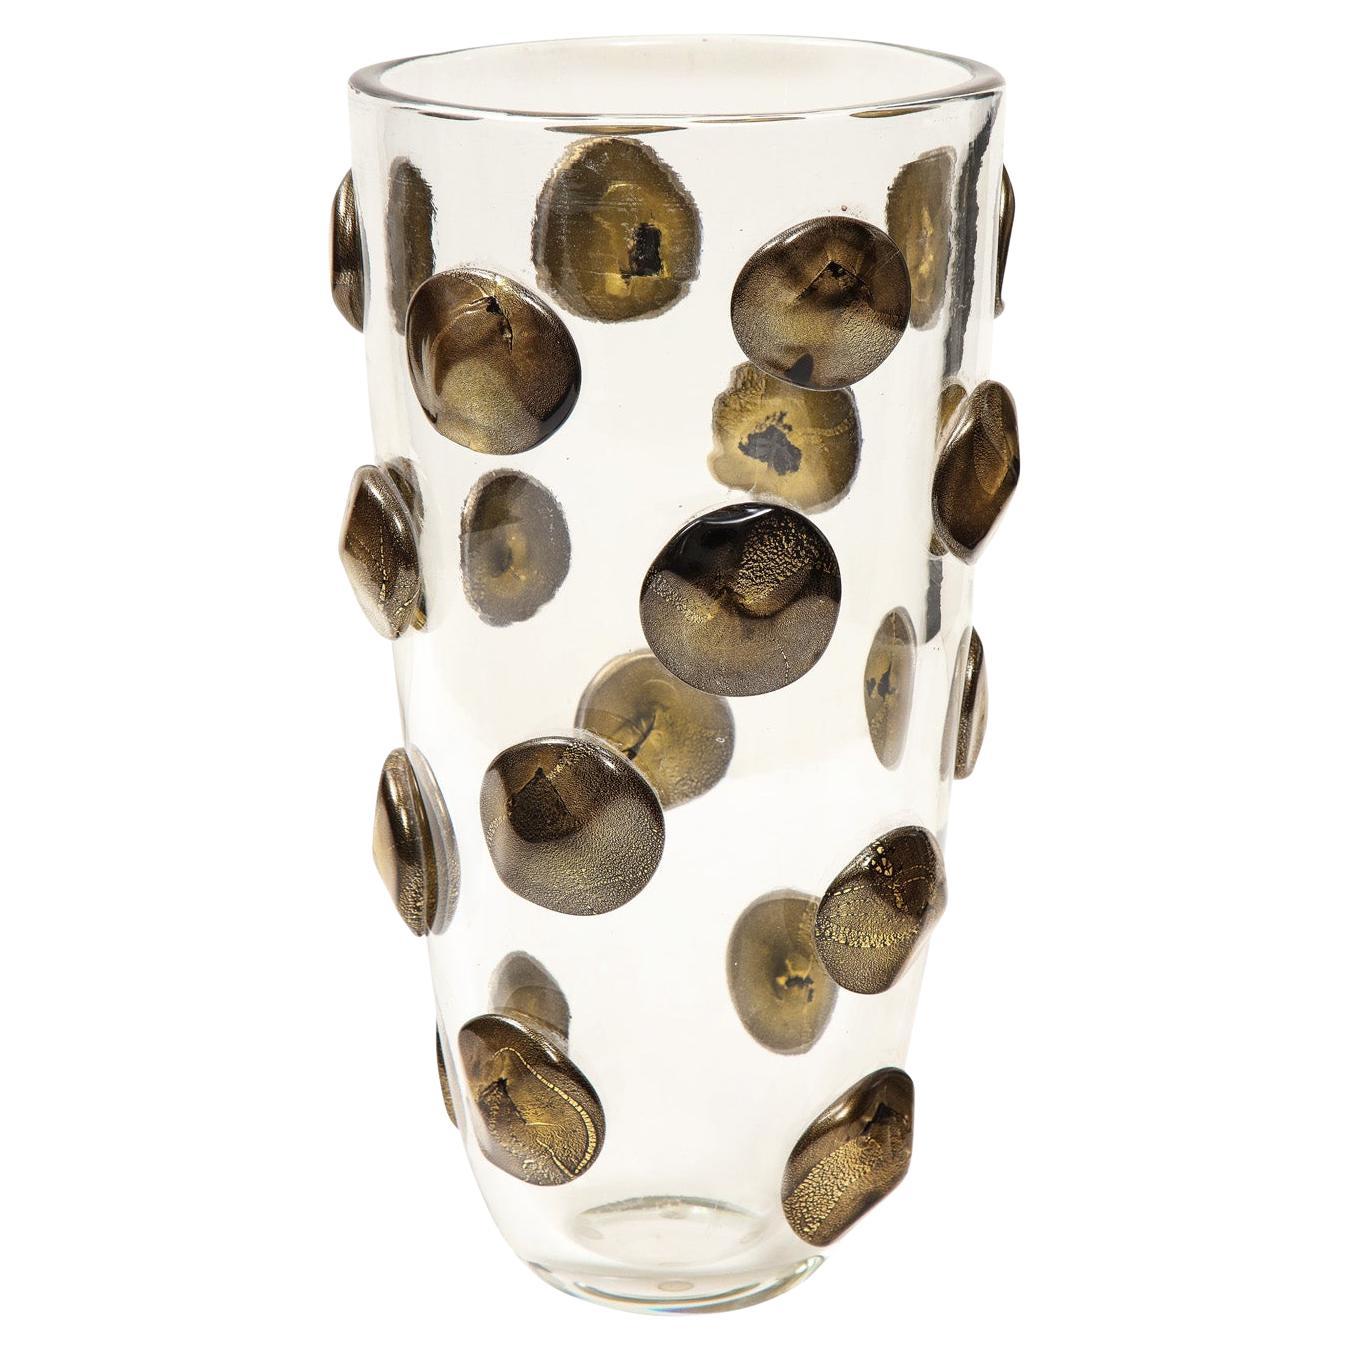 Hand-Blown Murano Glass Vase with Black & Gold Glass Dot Design '2022'